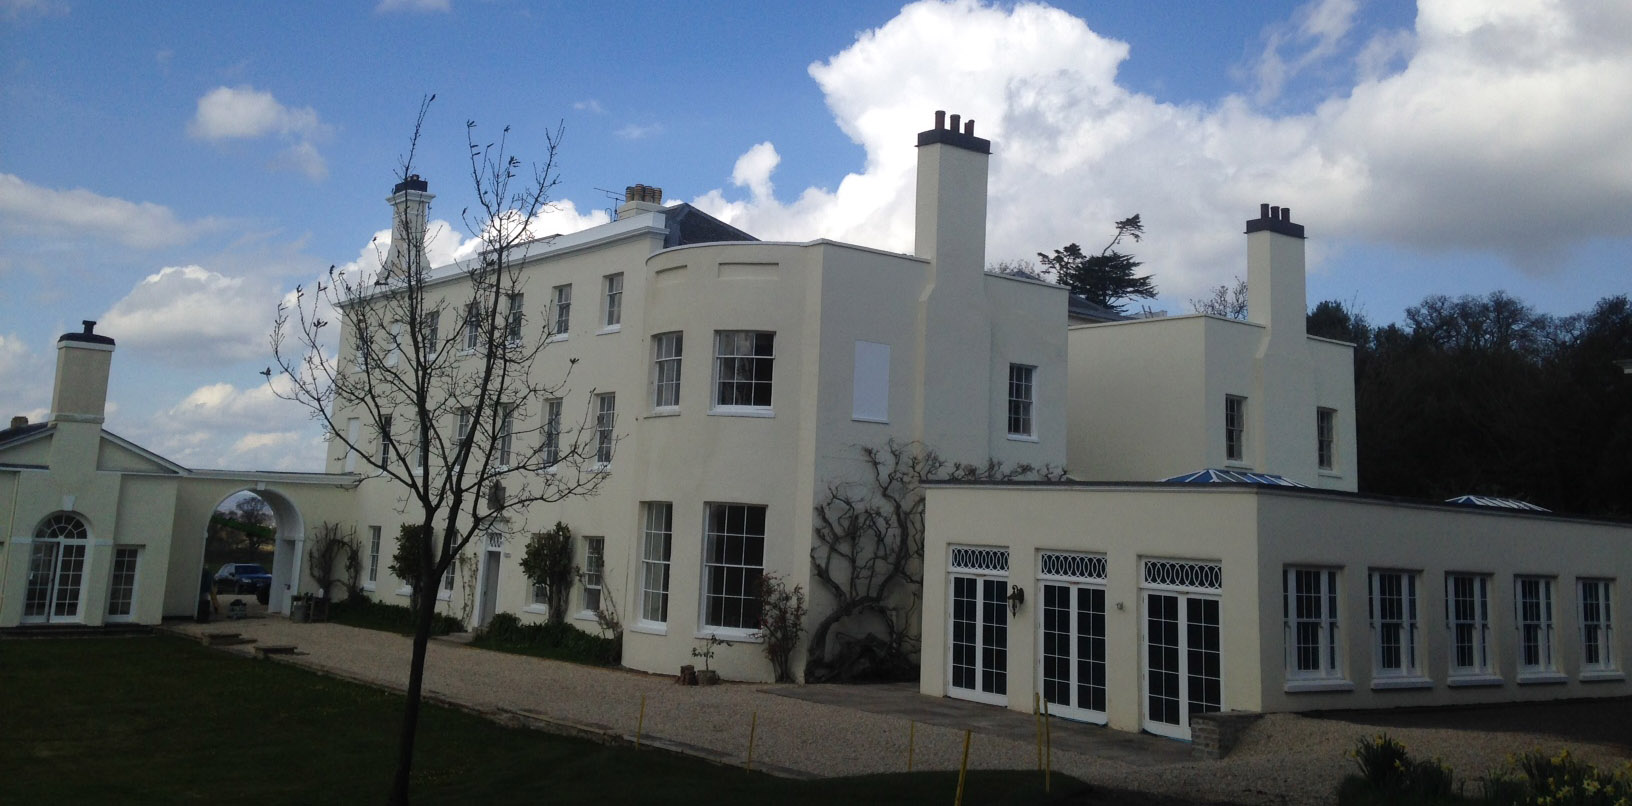 Rockbeare Manor, Devon: Remodelling a Grade I Listed Building